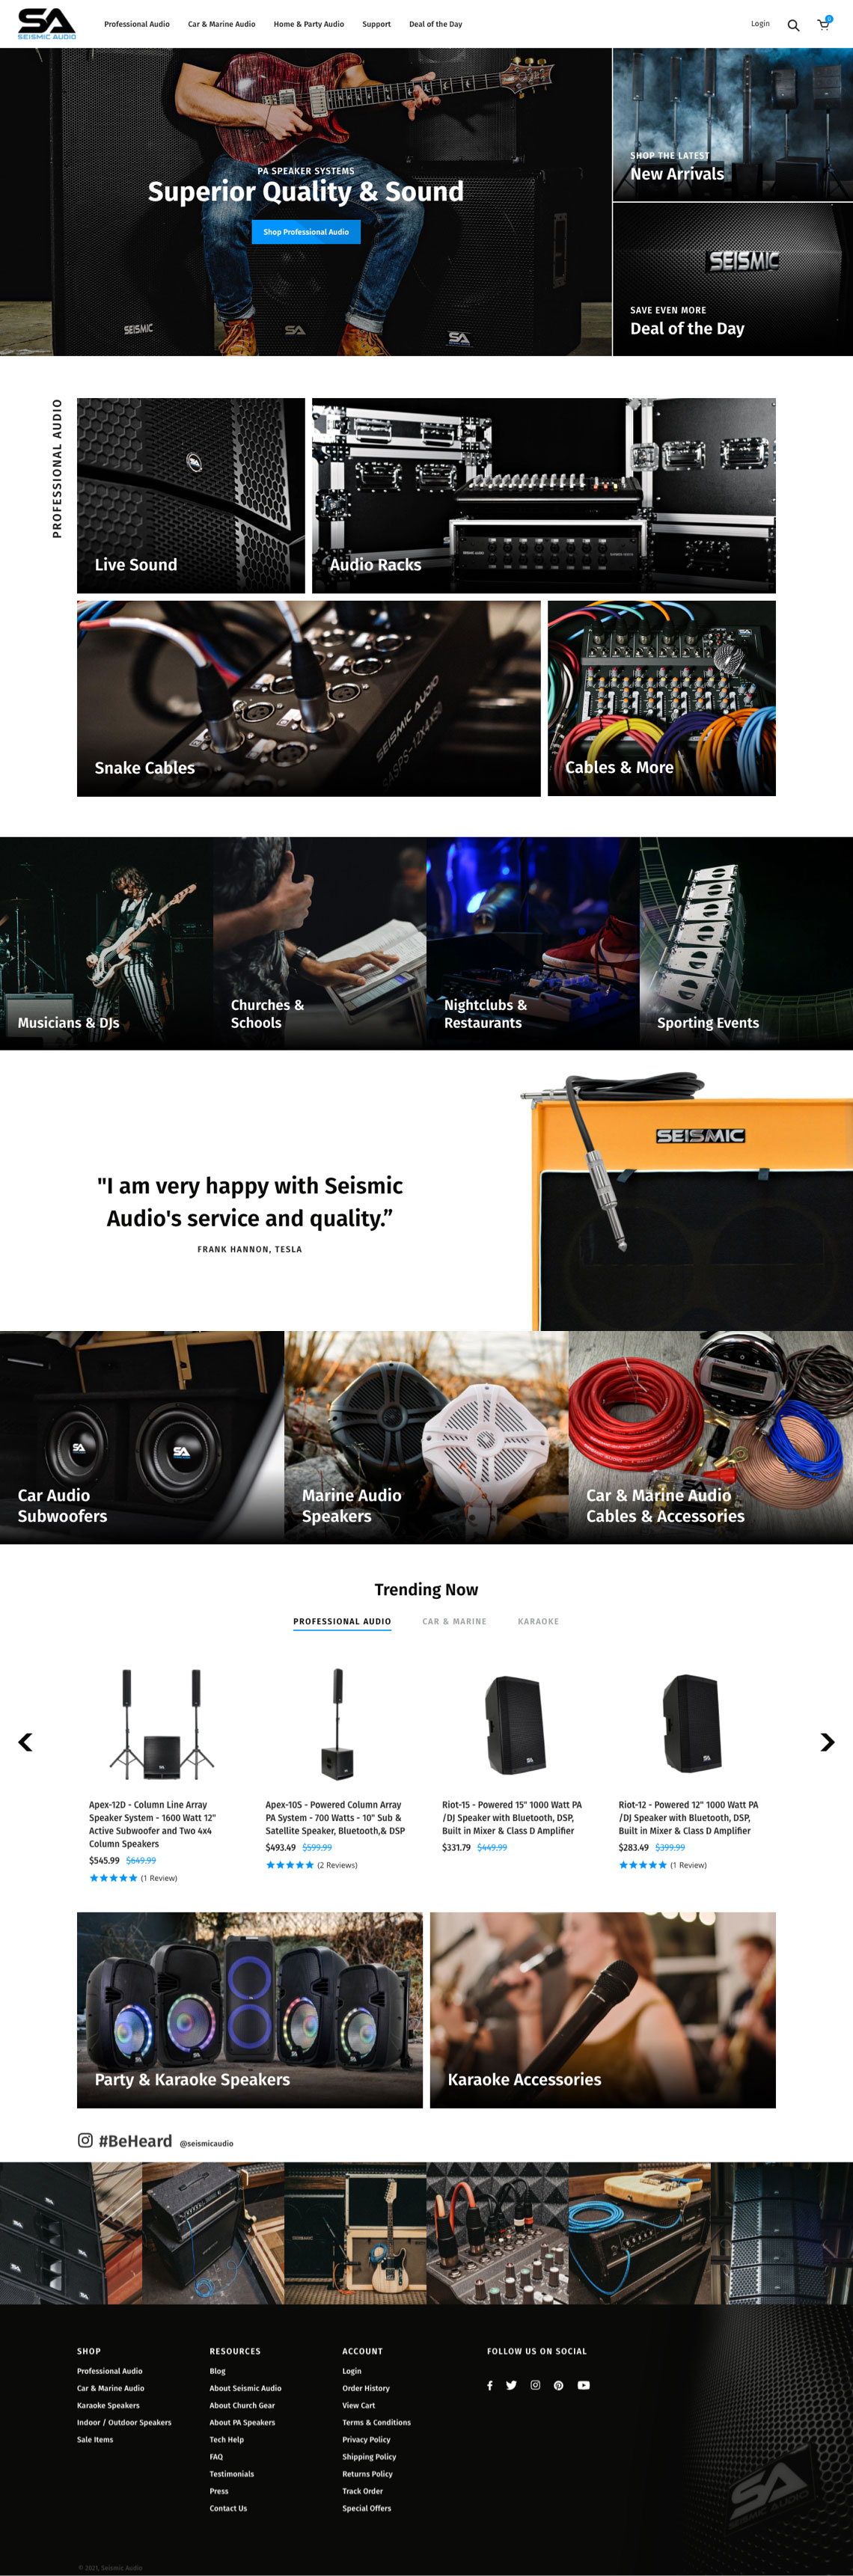 Seismic Audio - Homepage